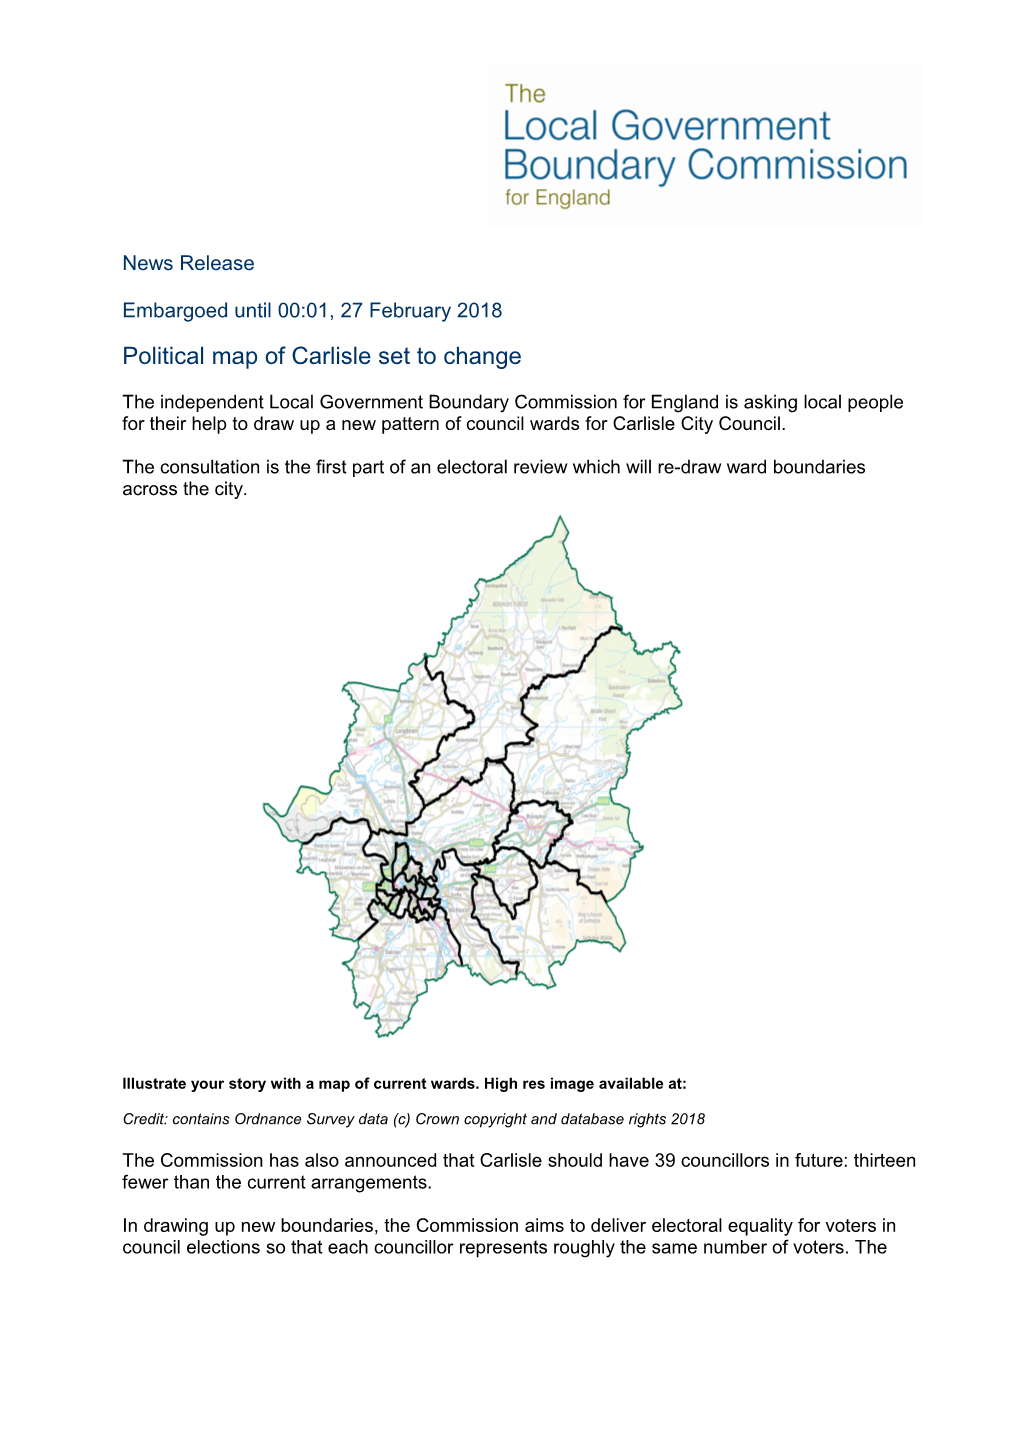 Political Map of Carlisle Set to Change